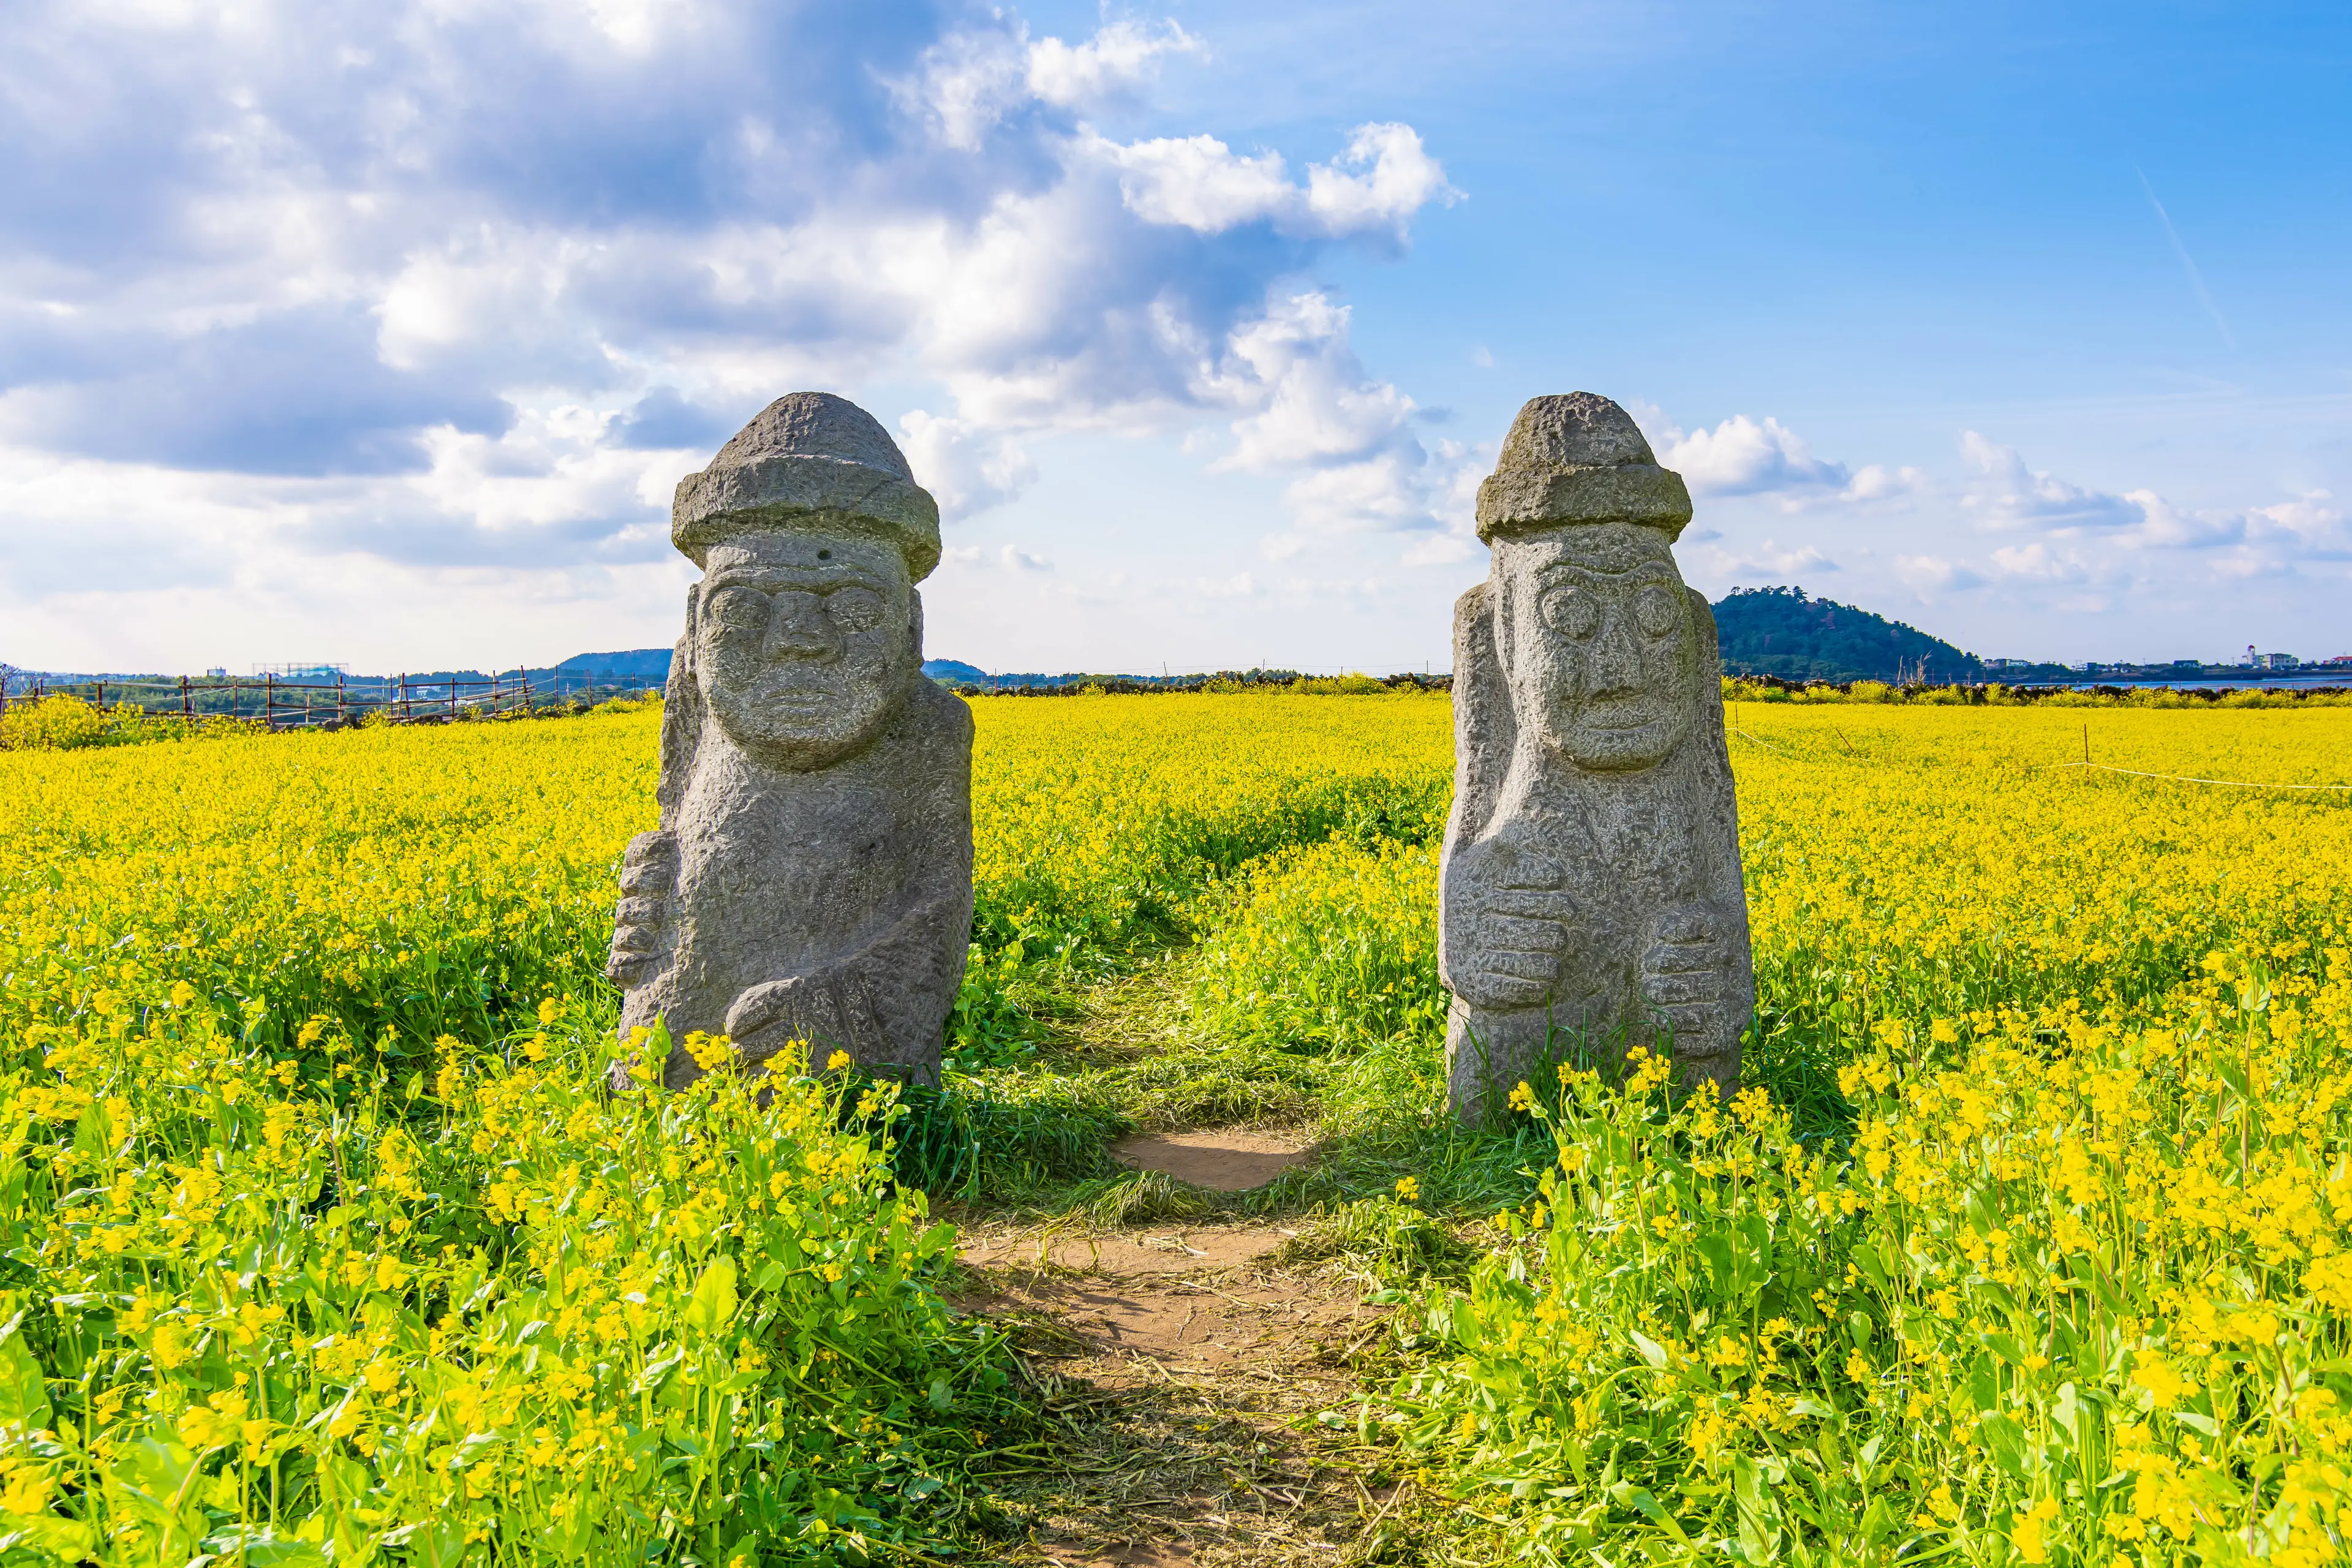 Hareubang stone figures in yellow canola field